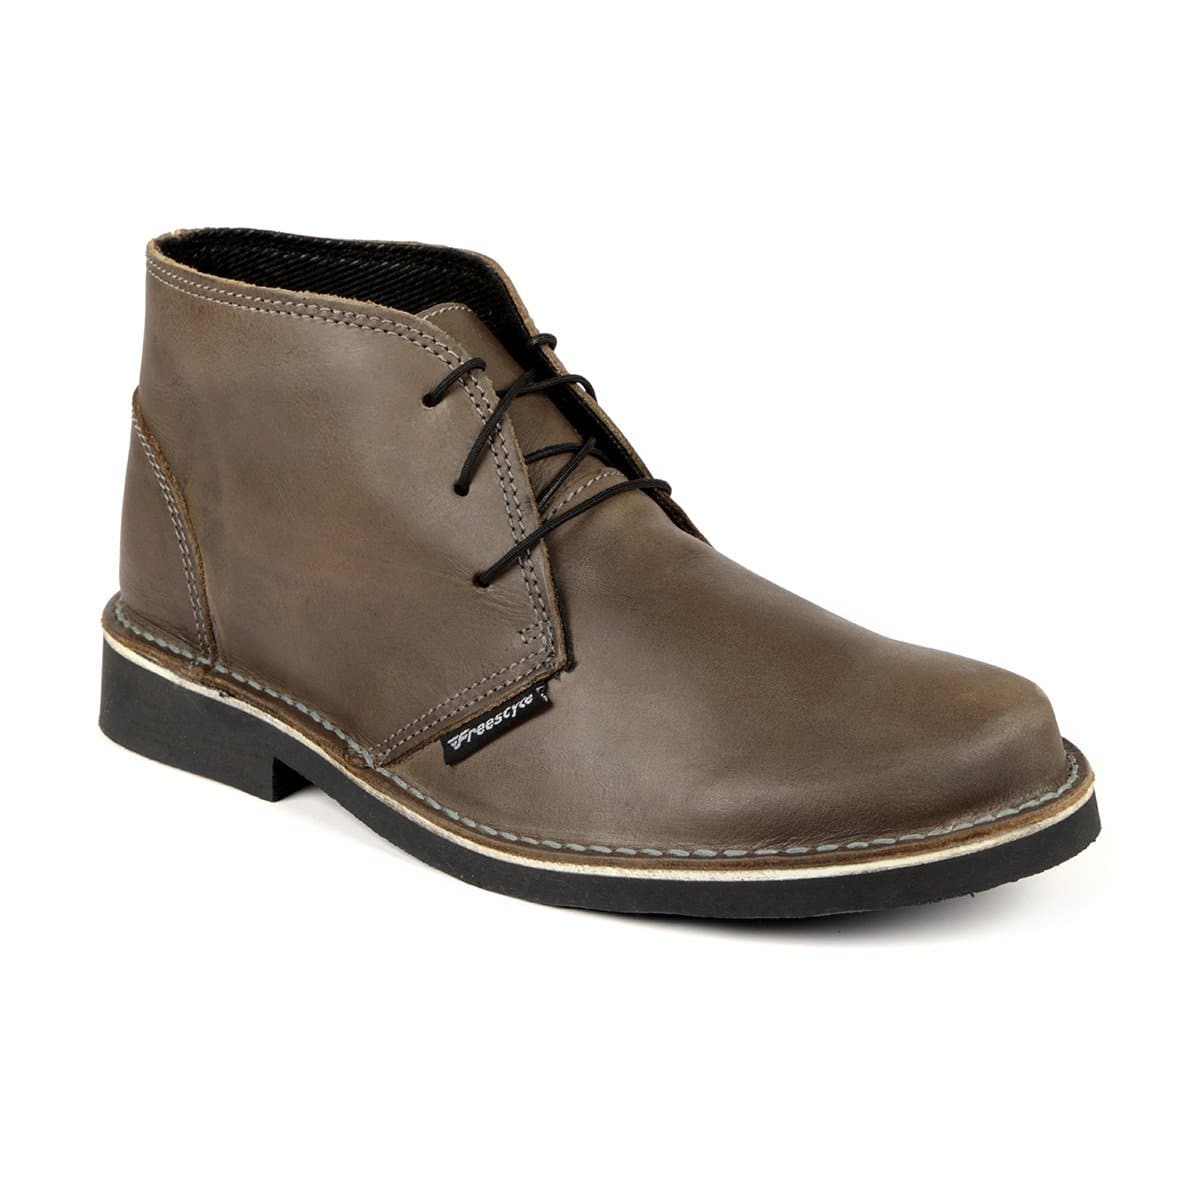 Yster Premium Leather Veldskoen - Freestyle SA Proudly local boots leather boots veldskoens vellies leather shoes suede veldskoens